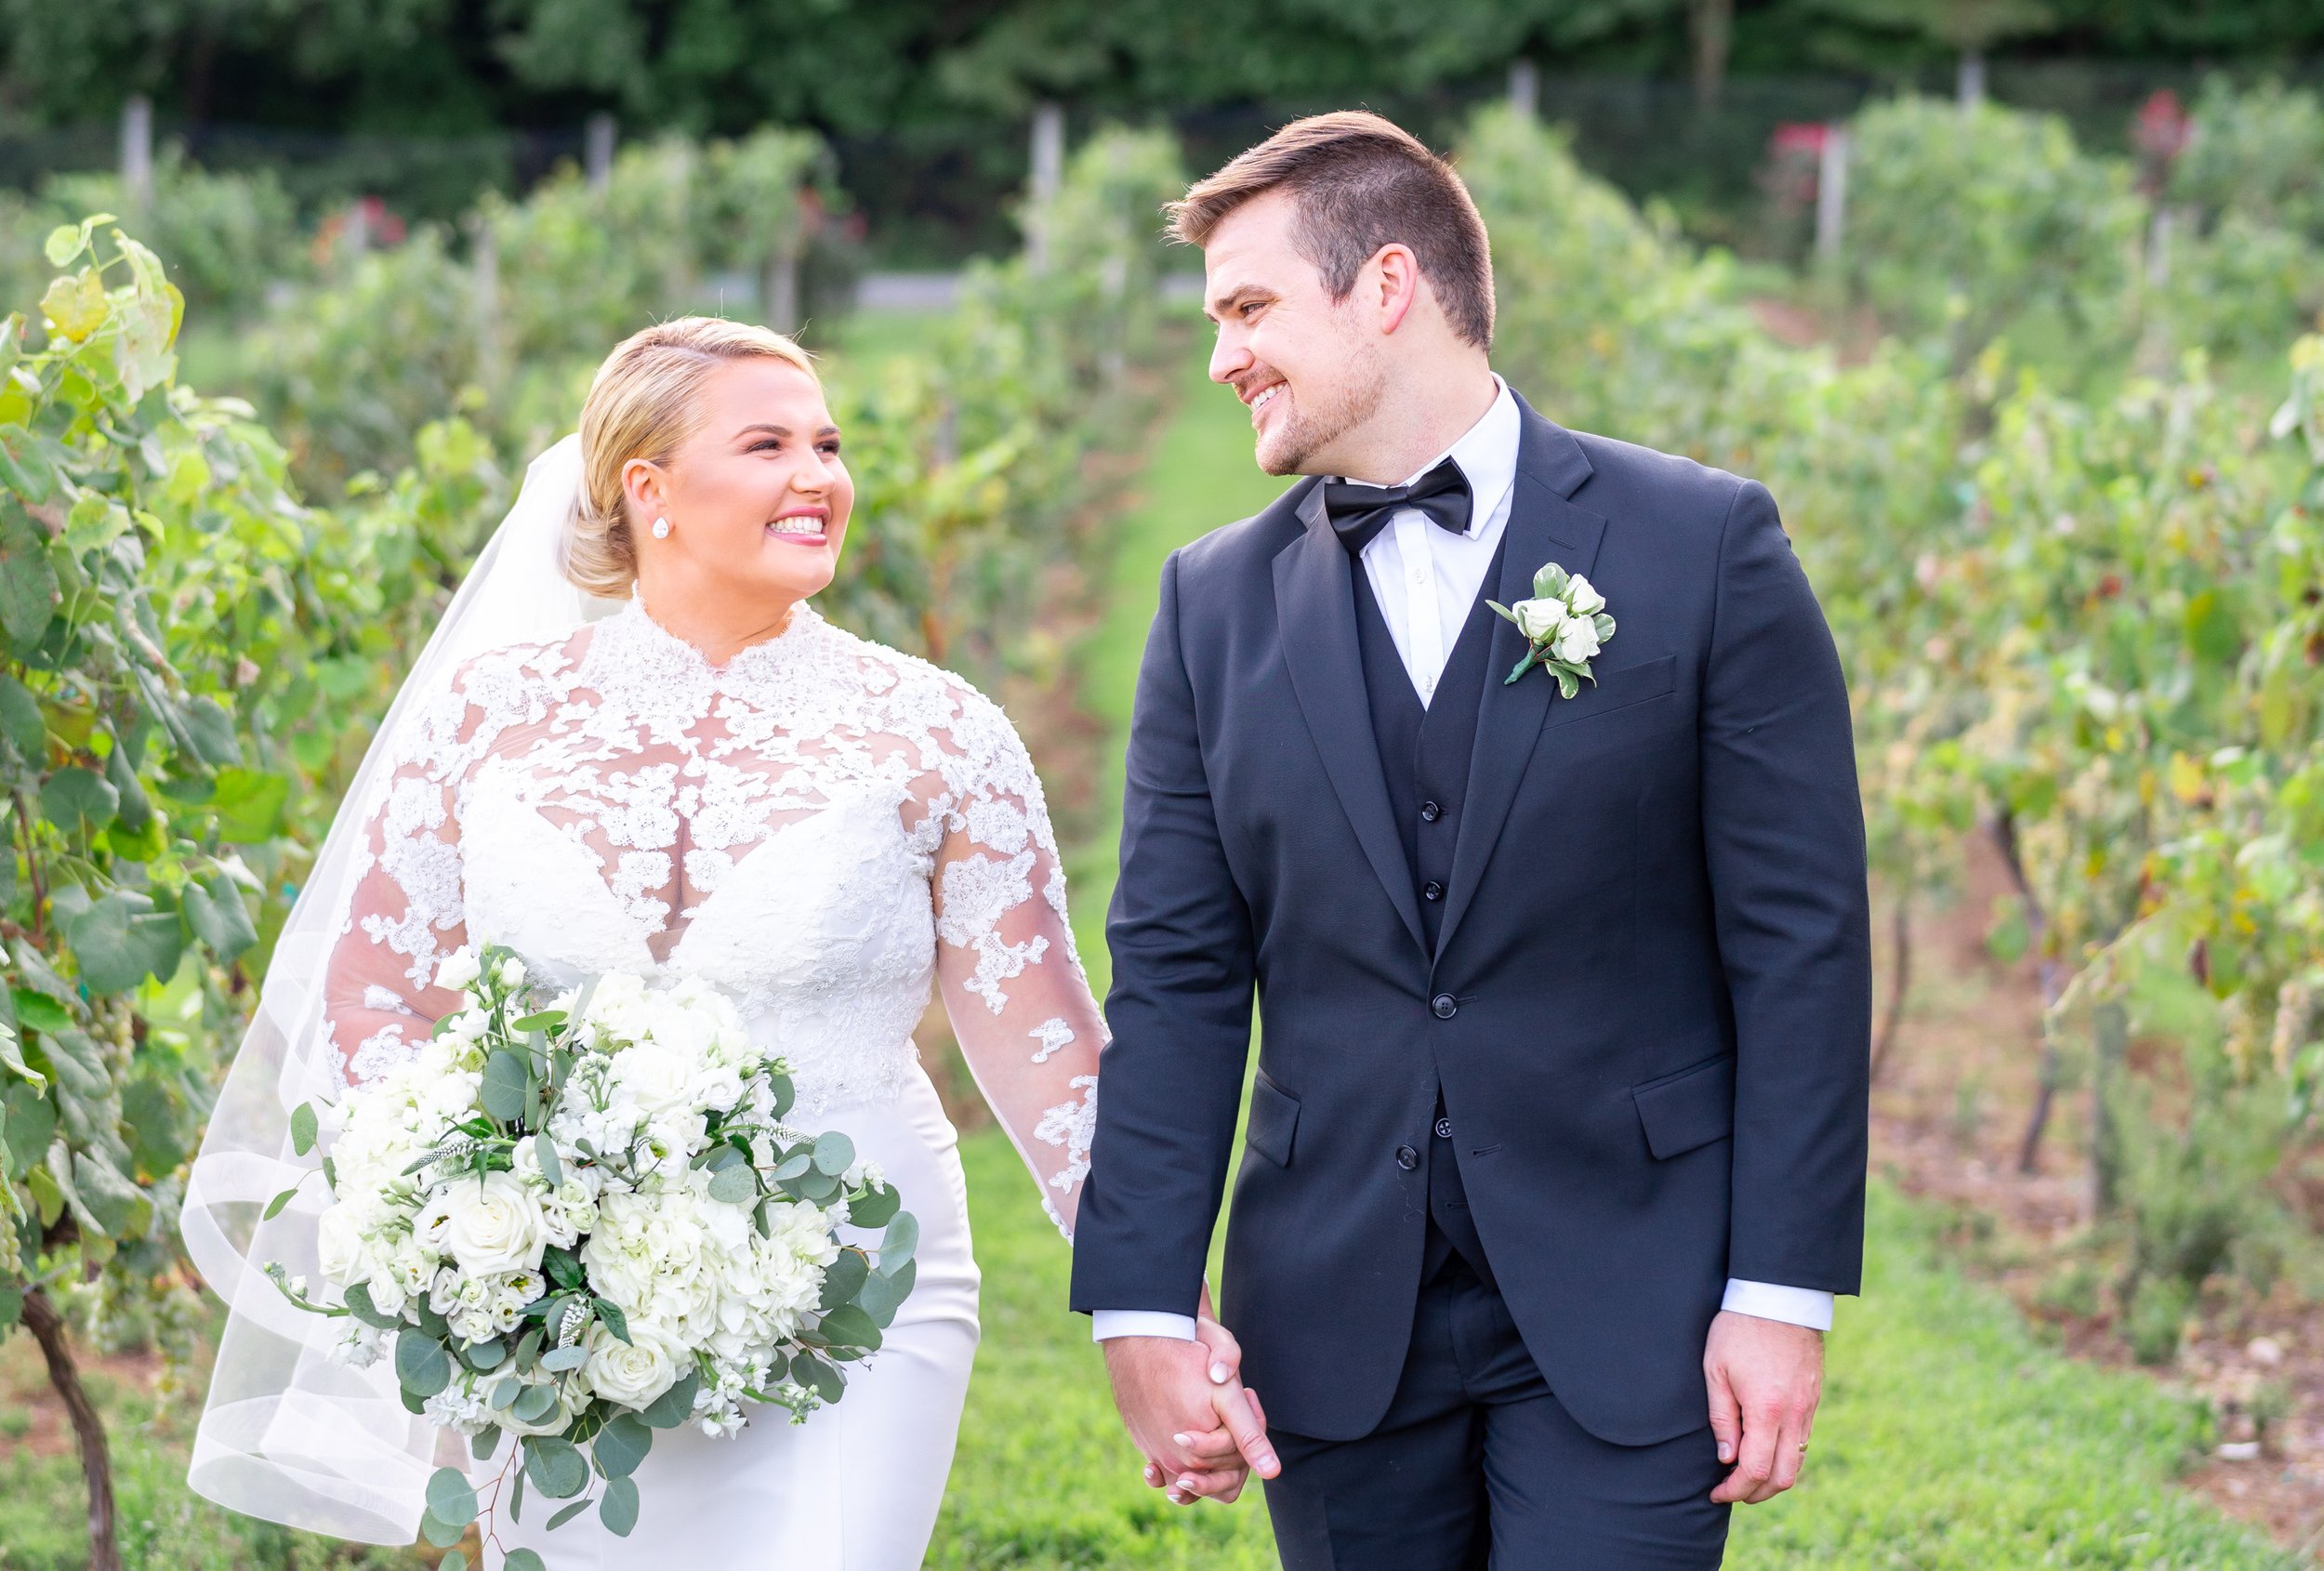 Bride and groom walk in maryland vineyard wedding venue holding hands